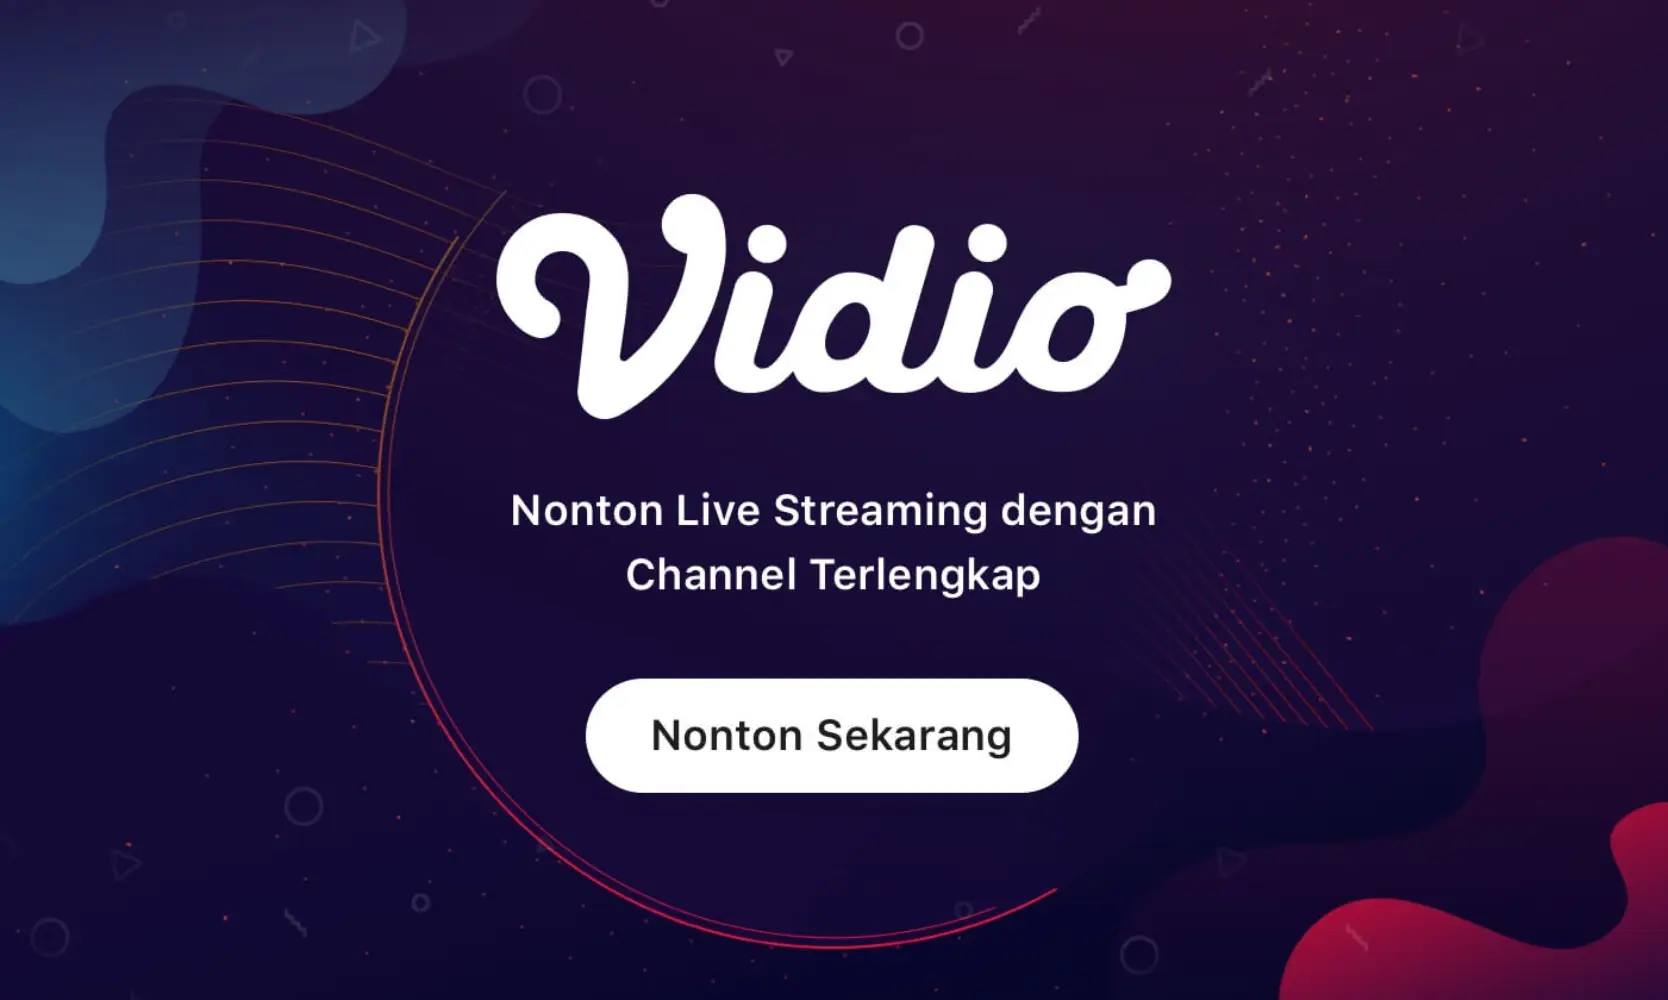 Indonesia’s Vidio aim to double subscribers ahead of IPO